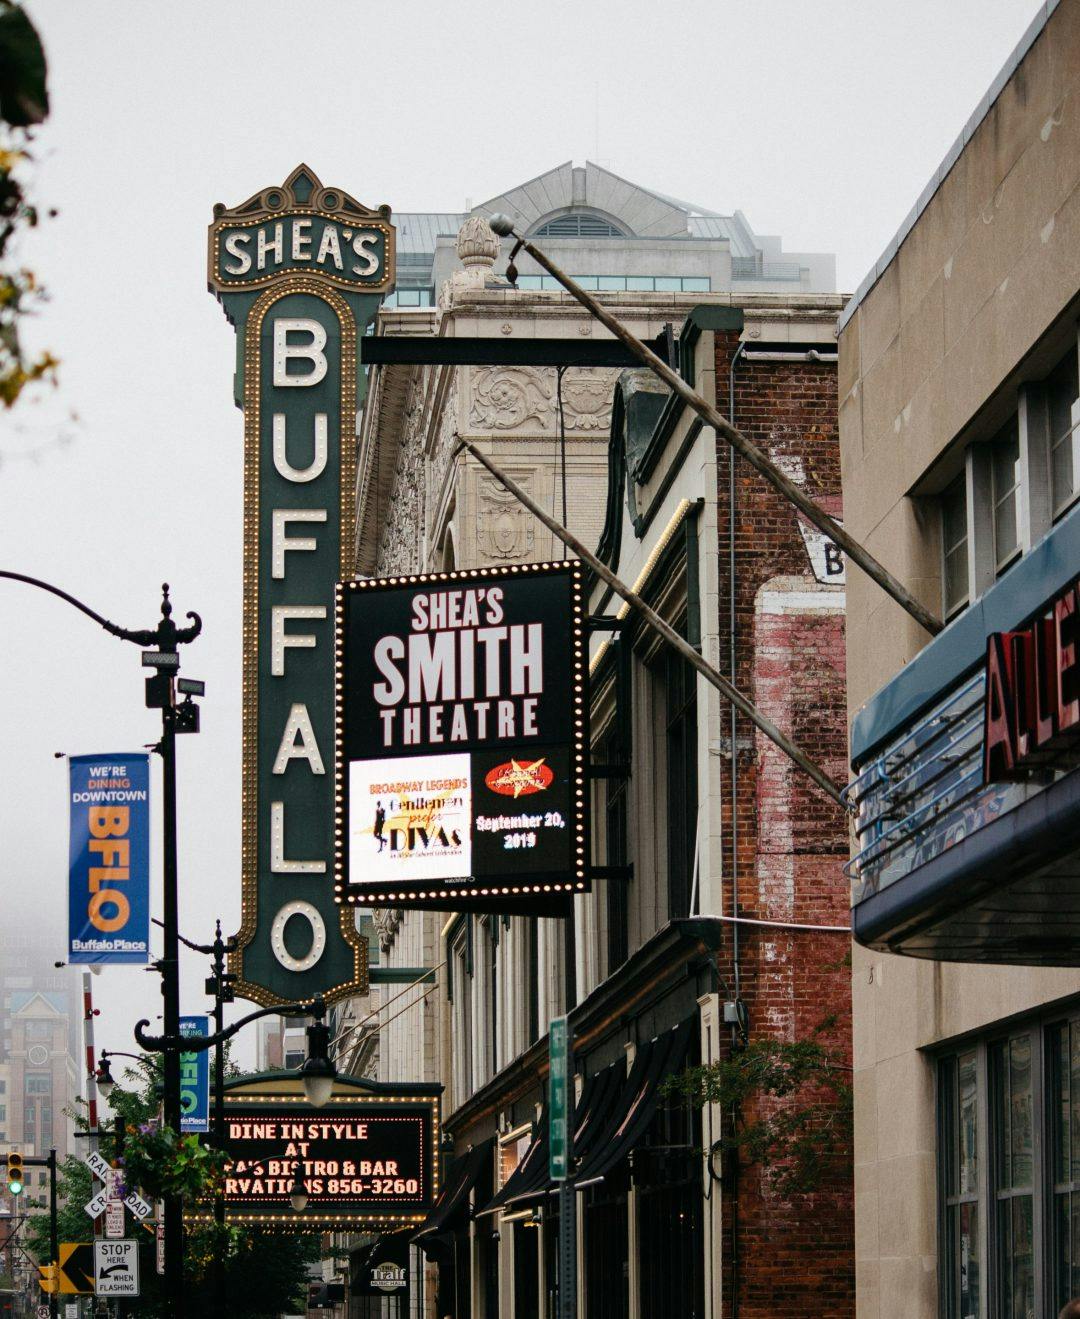 Sheas Smith Theatre in Buffalo